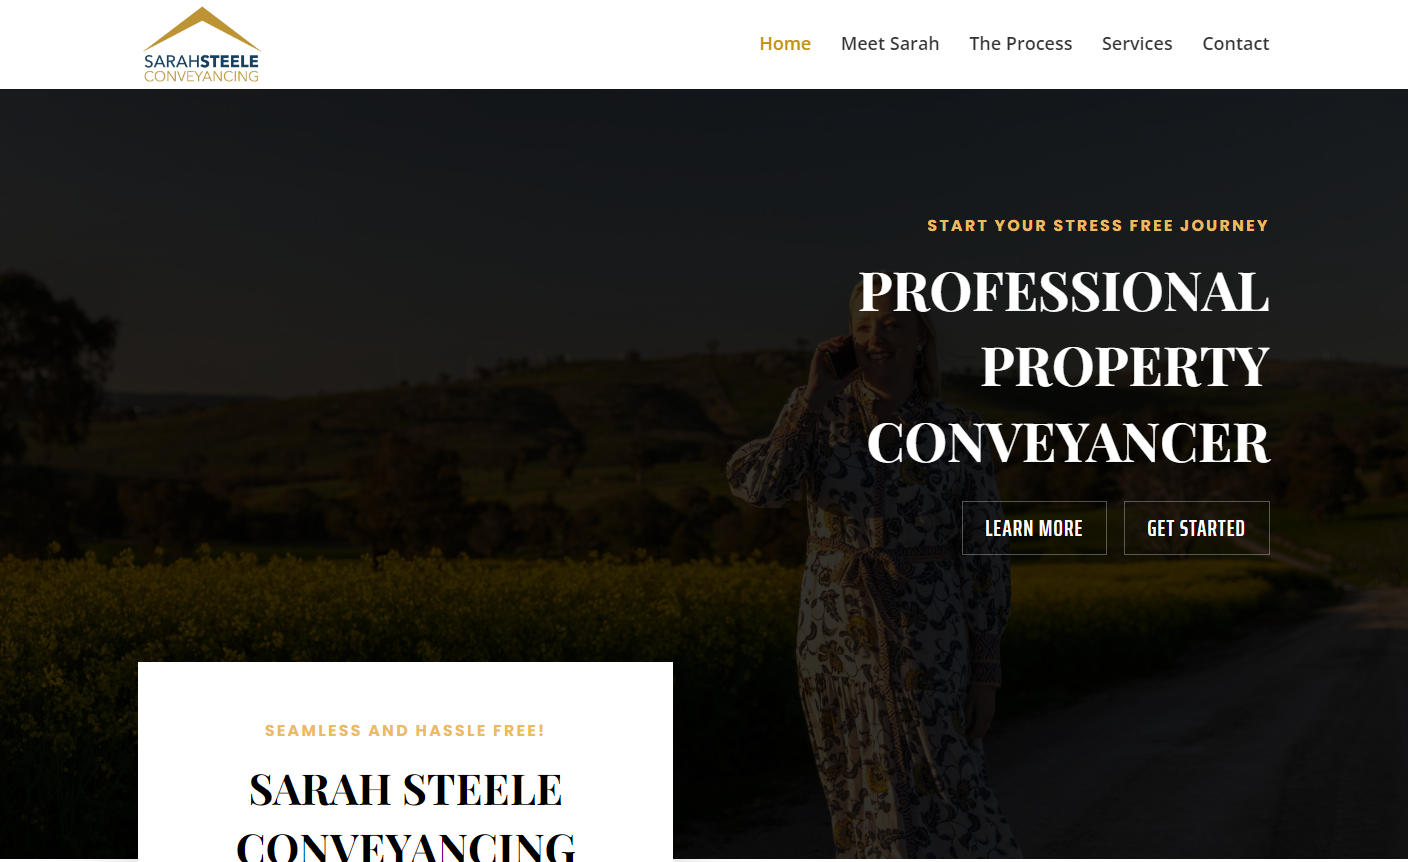 Sarah Steele Conveyancing - new website design and development